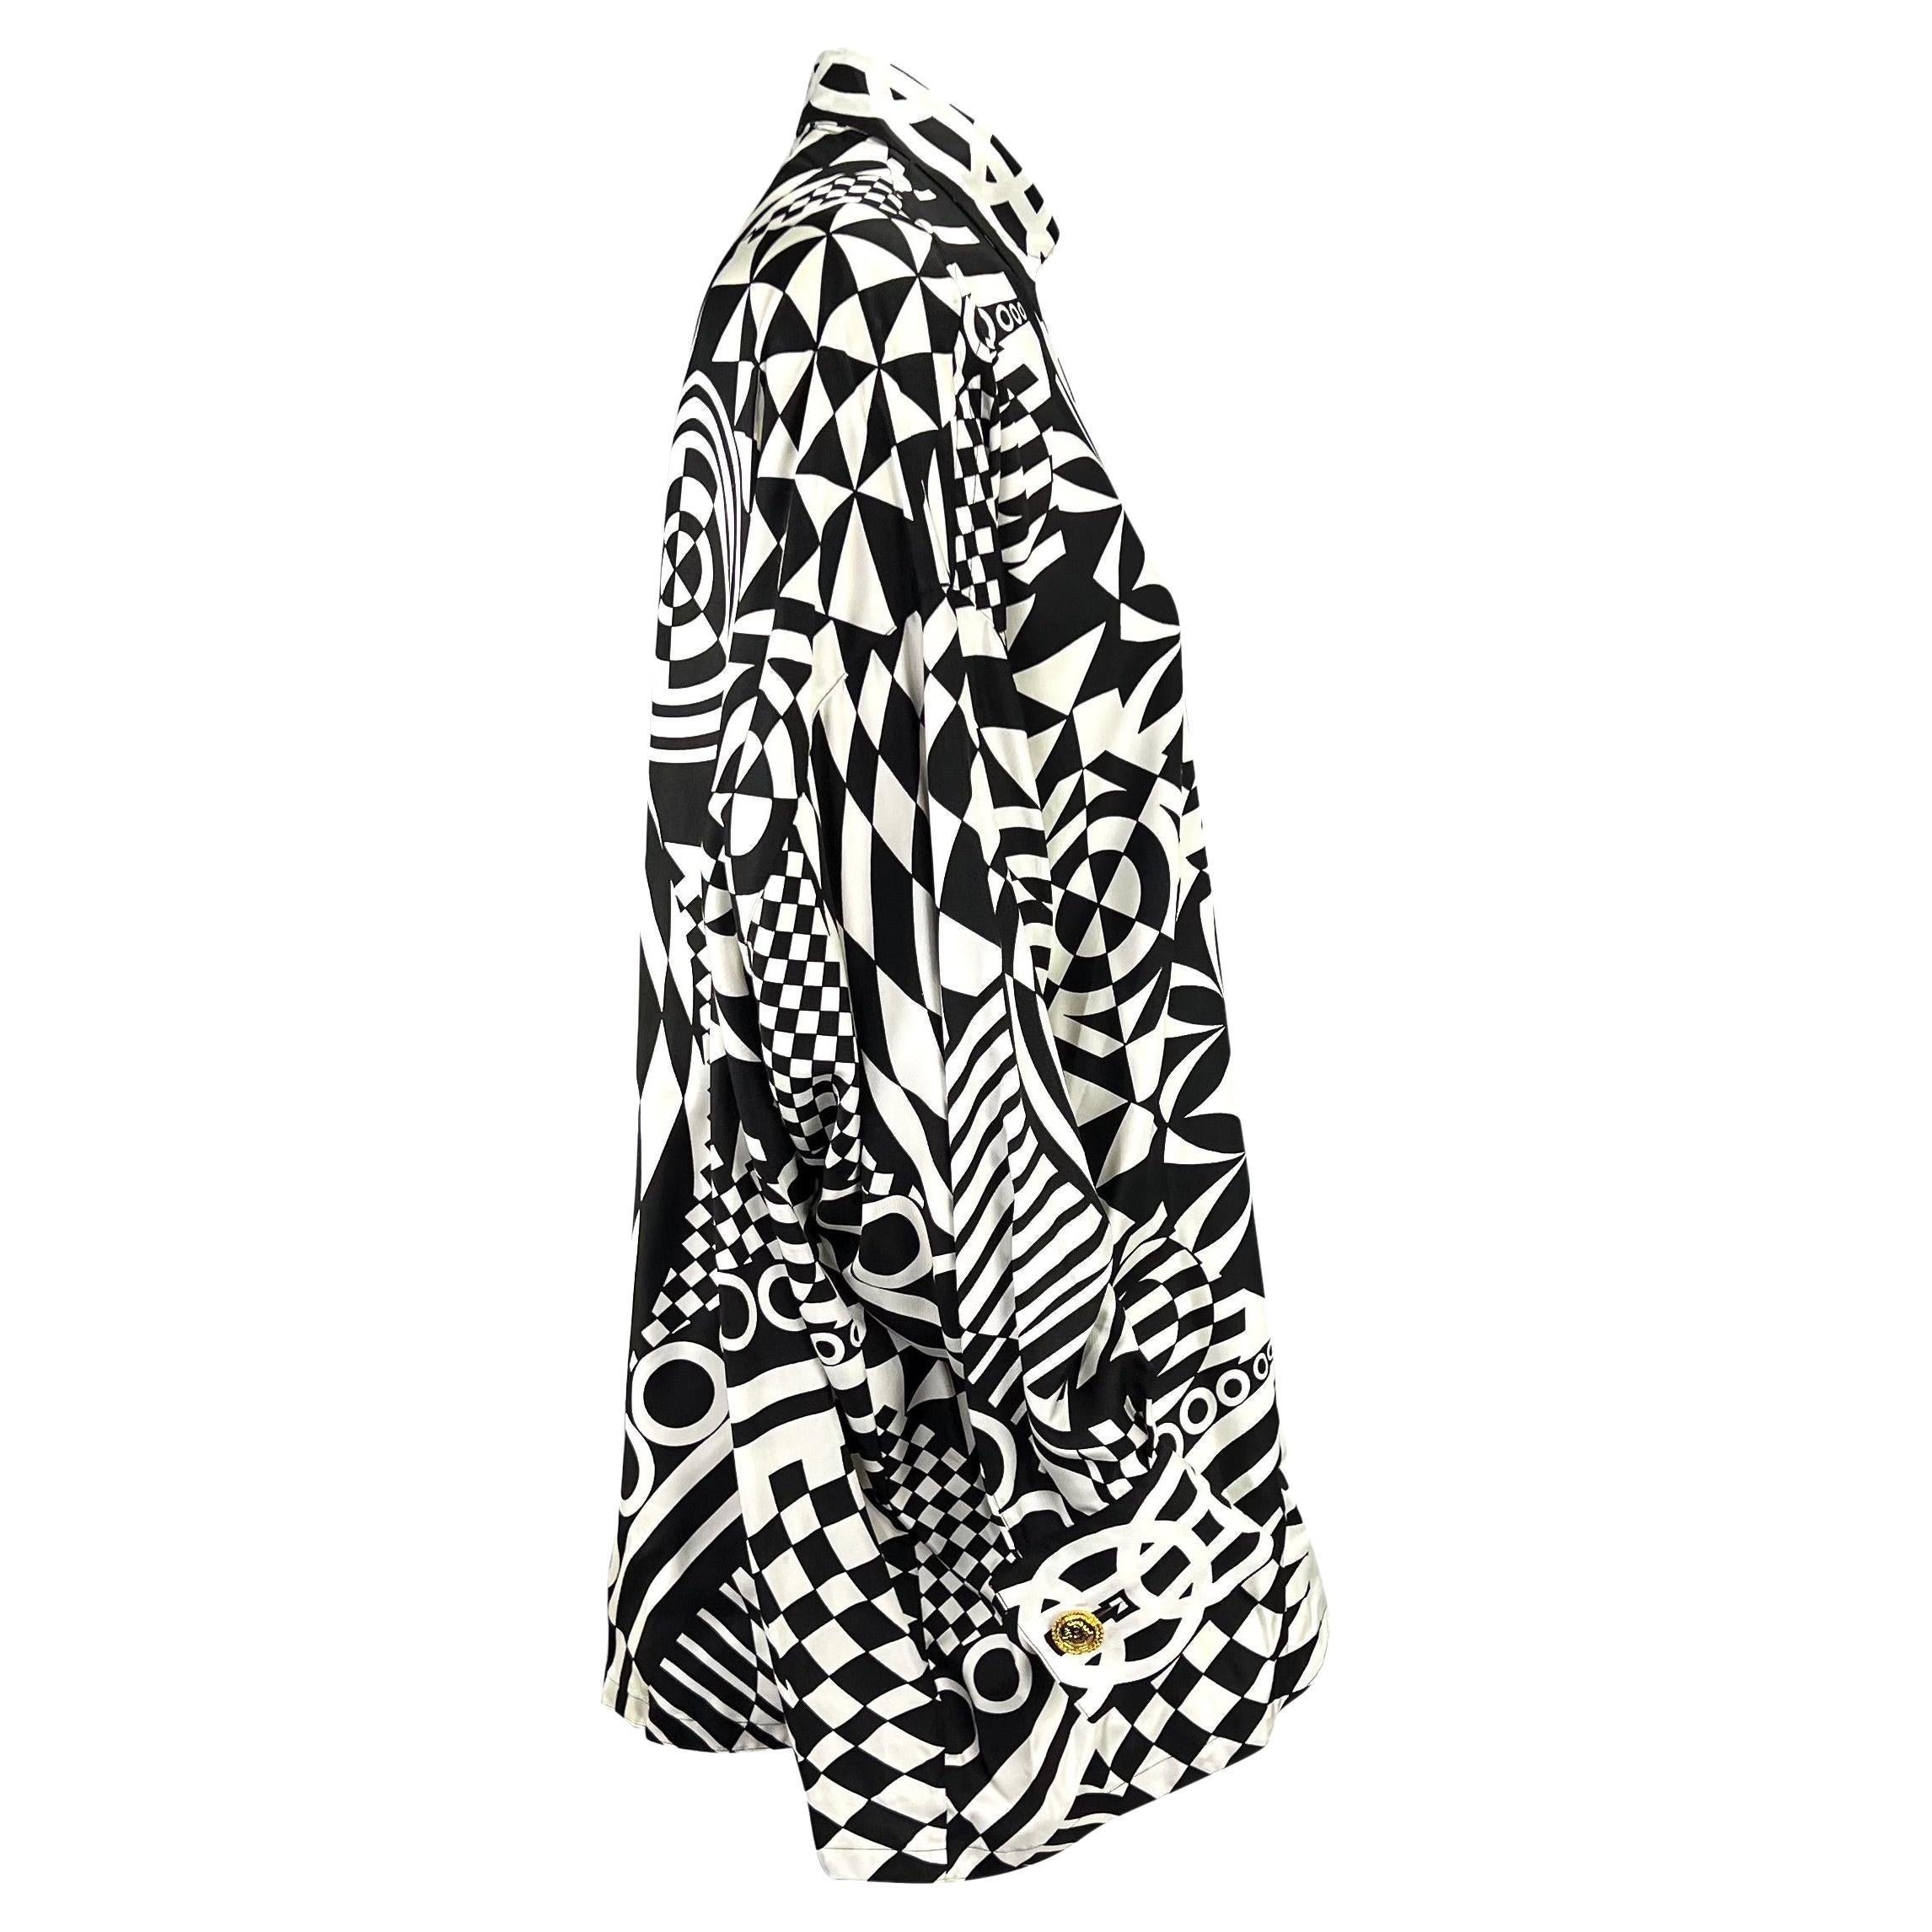 S/S 1992 Gianni Versace Couture Silk Black & White Geometric Print Button Down For Sale 2